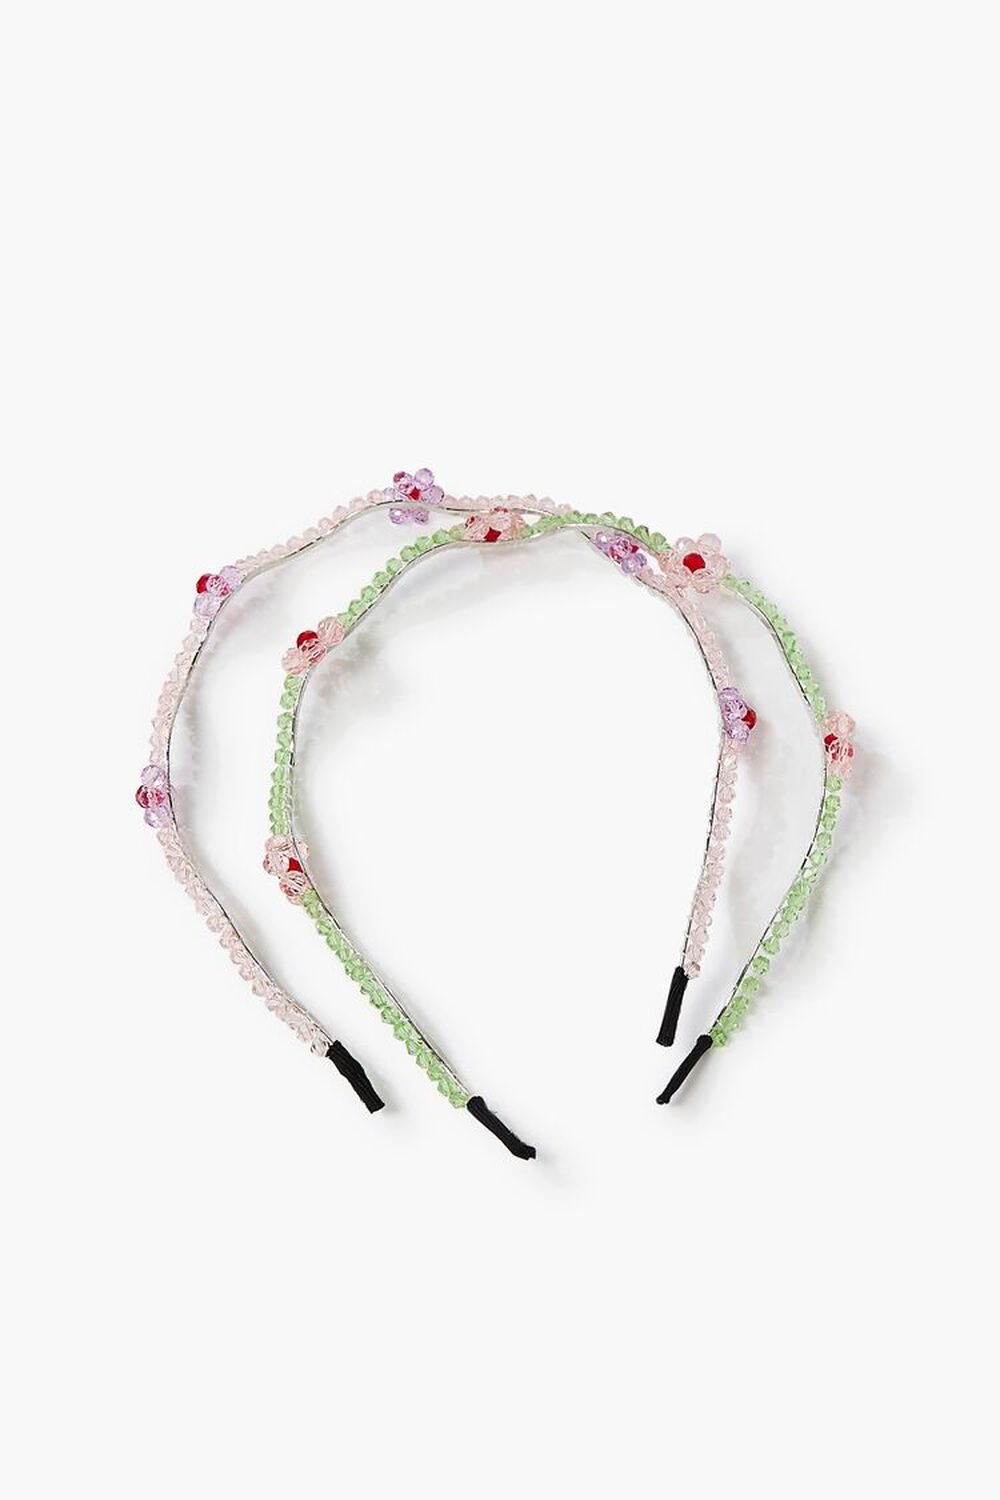 PINK/CREAM Beaded Flower Headband Set, image 1